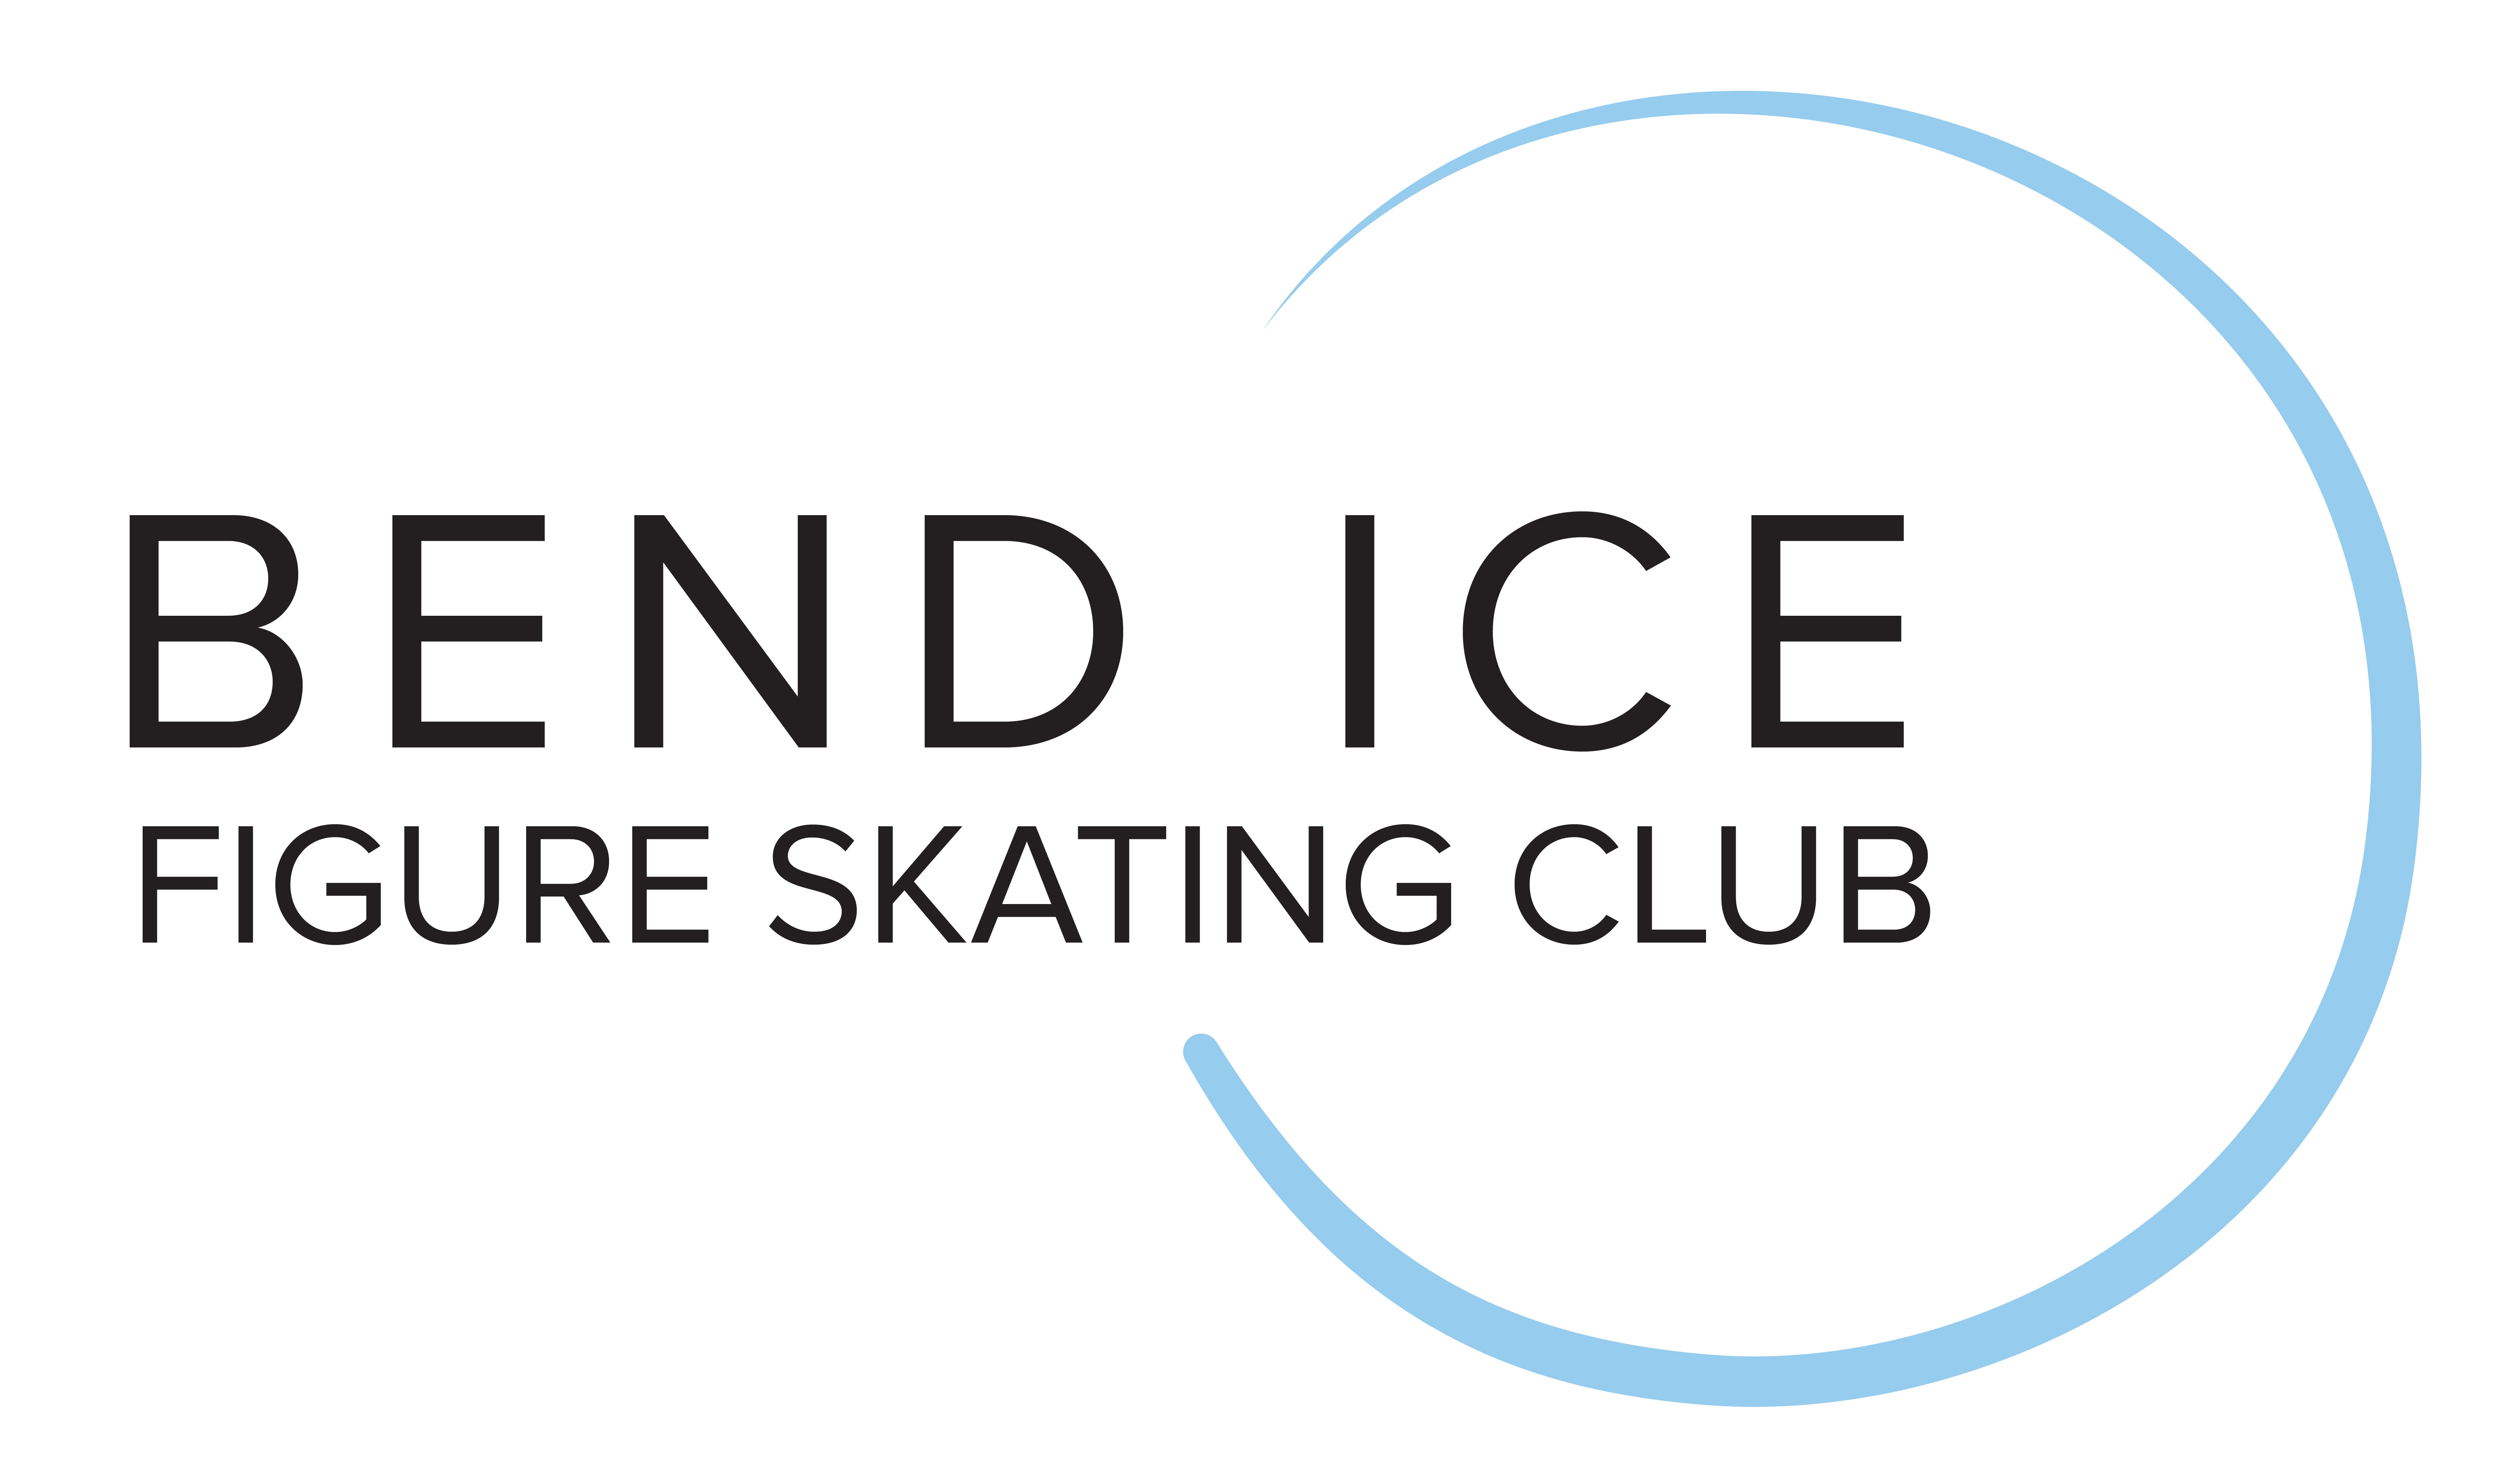 Bend Ice Figure Skating Club